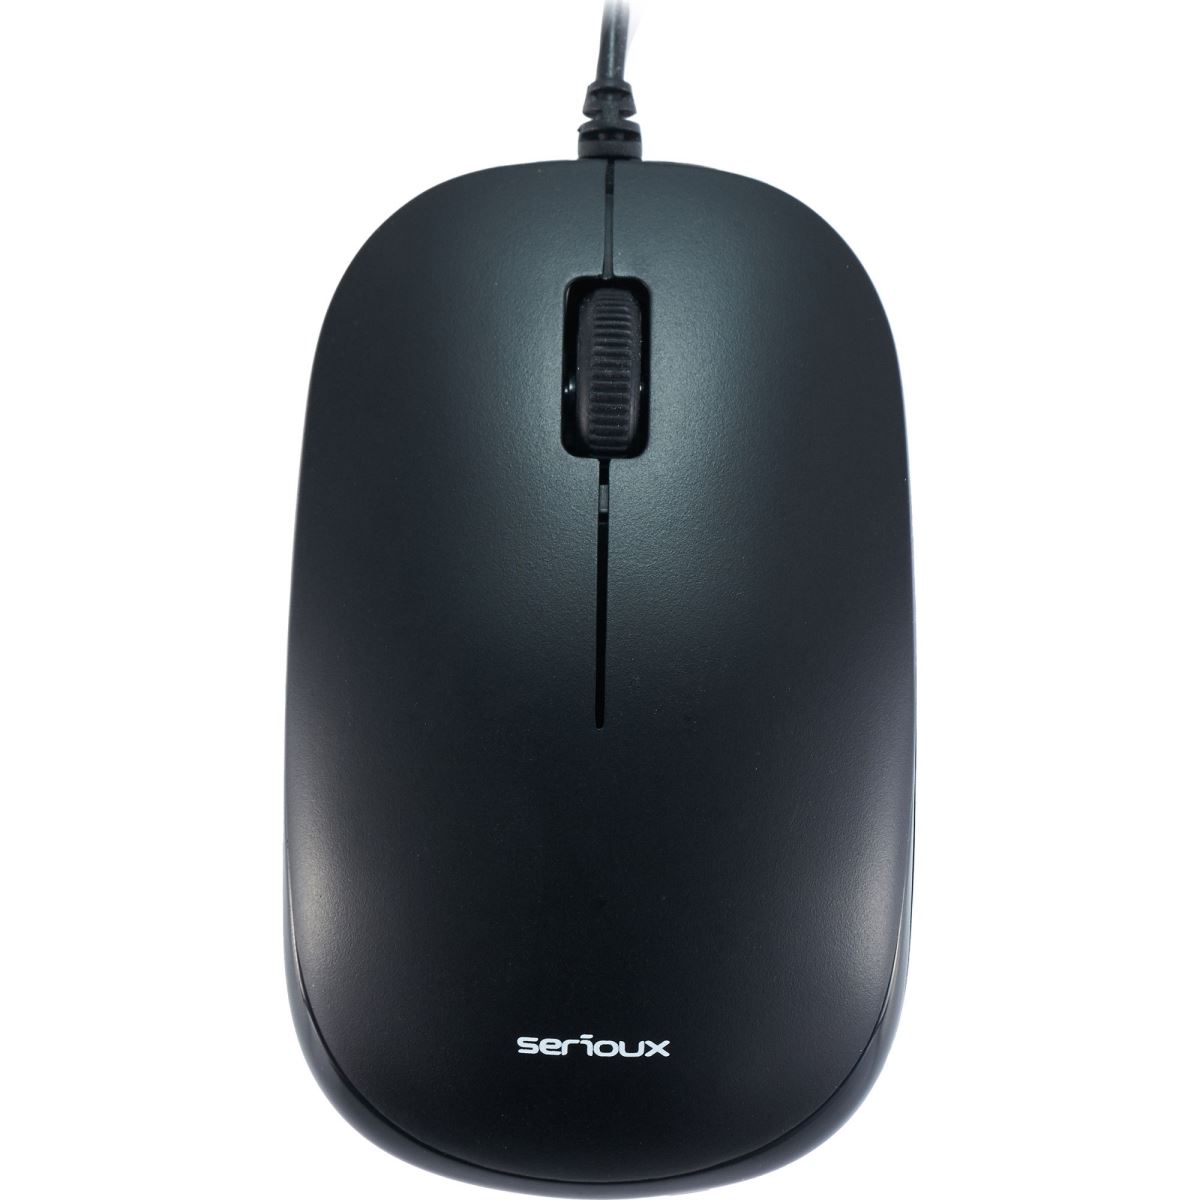 Mouse Serioux cu fir, Optic, 1000dpi, Negru, Ambidextru, Blister, Cablu 1.6m, USB